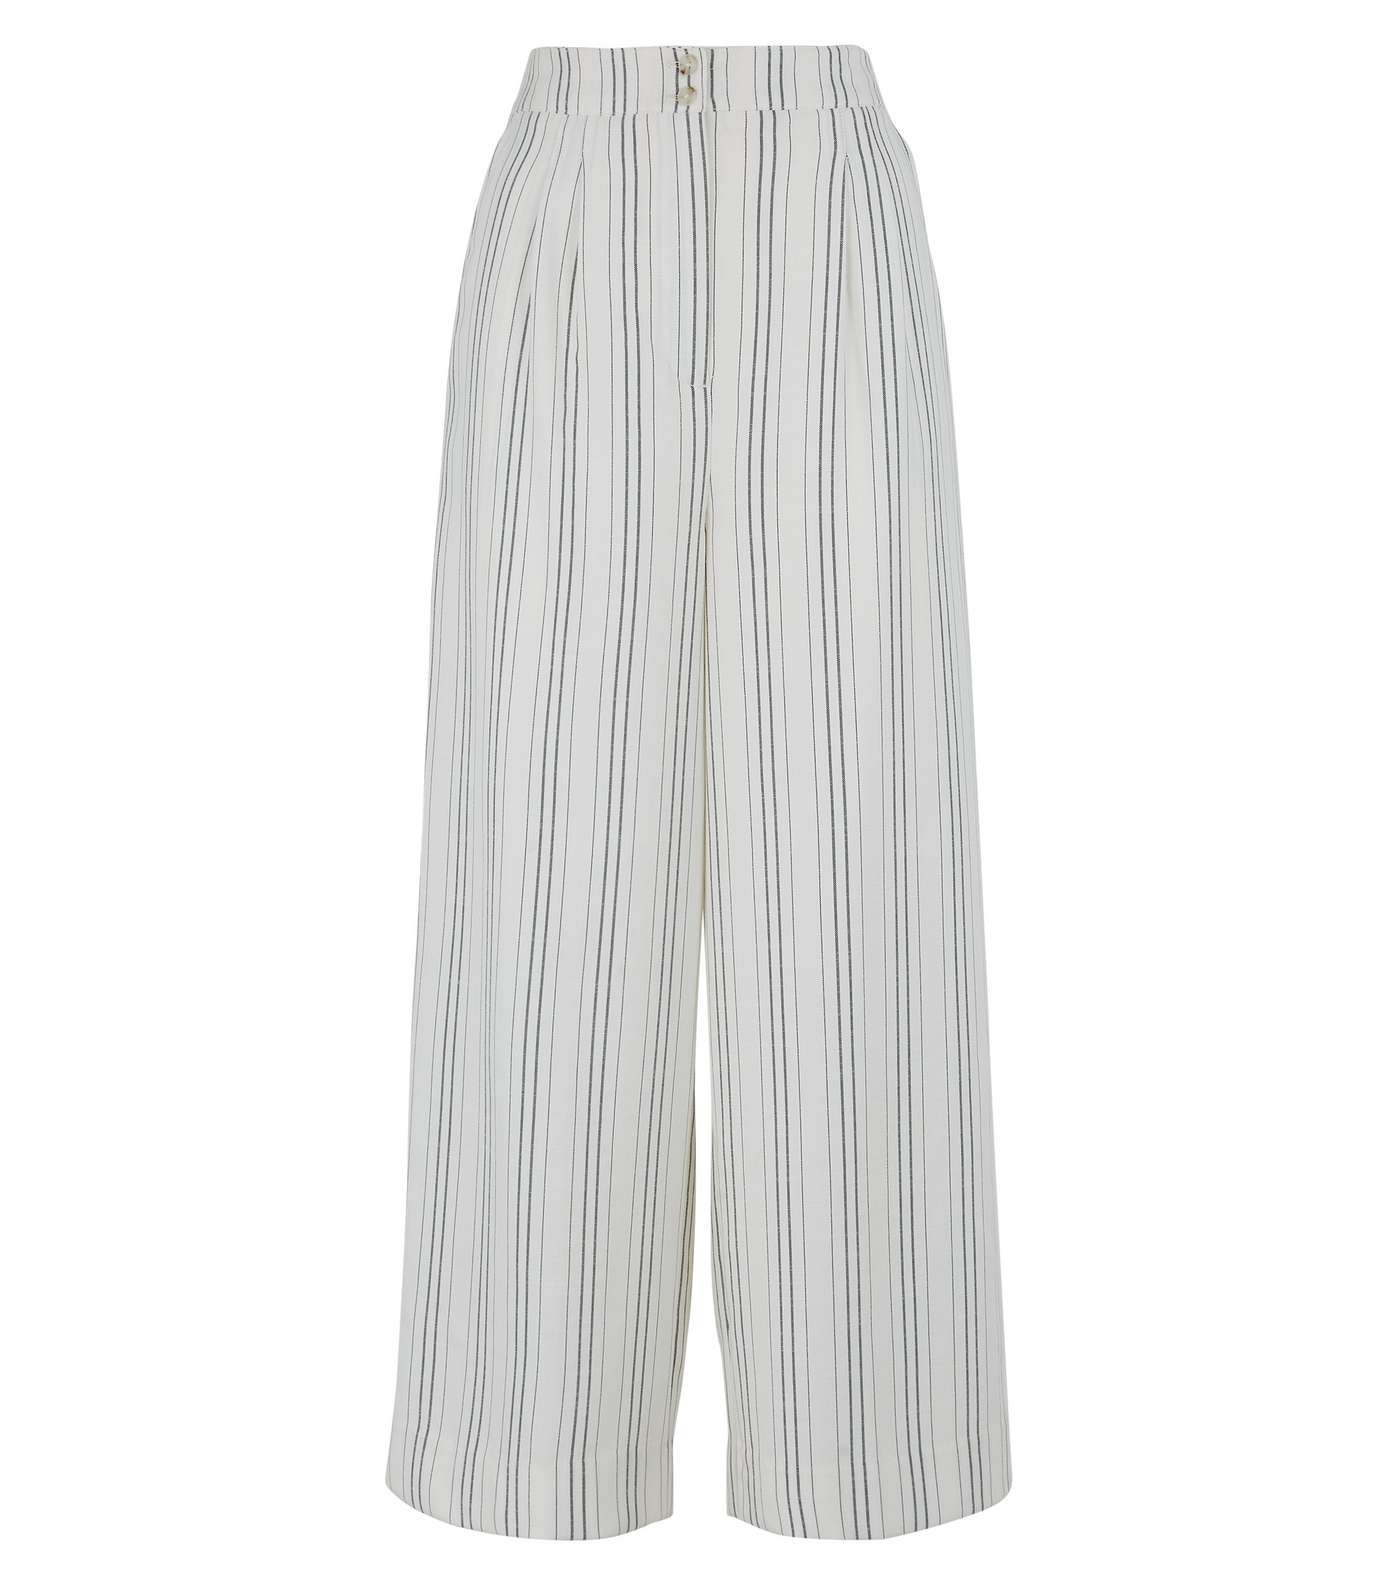 White Stripe Linen Look Crop Trousers Image 4